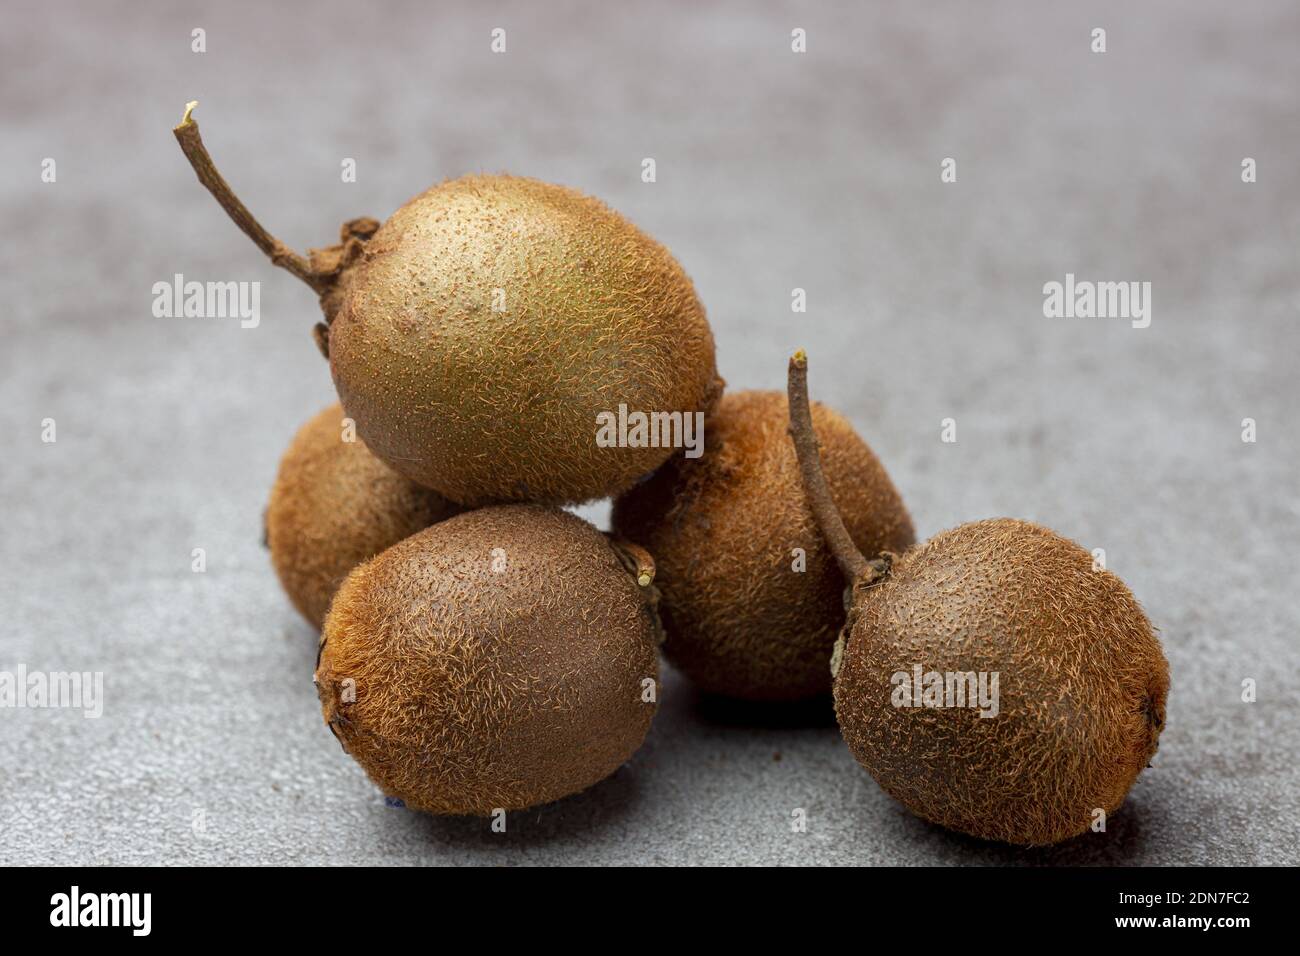 Bunch of tiny kiwifruit of Actinidia Deliciosa Setosa species on a textured surface gray kitchen background Stock Photo